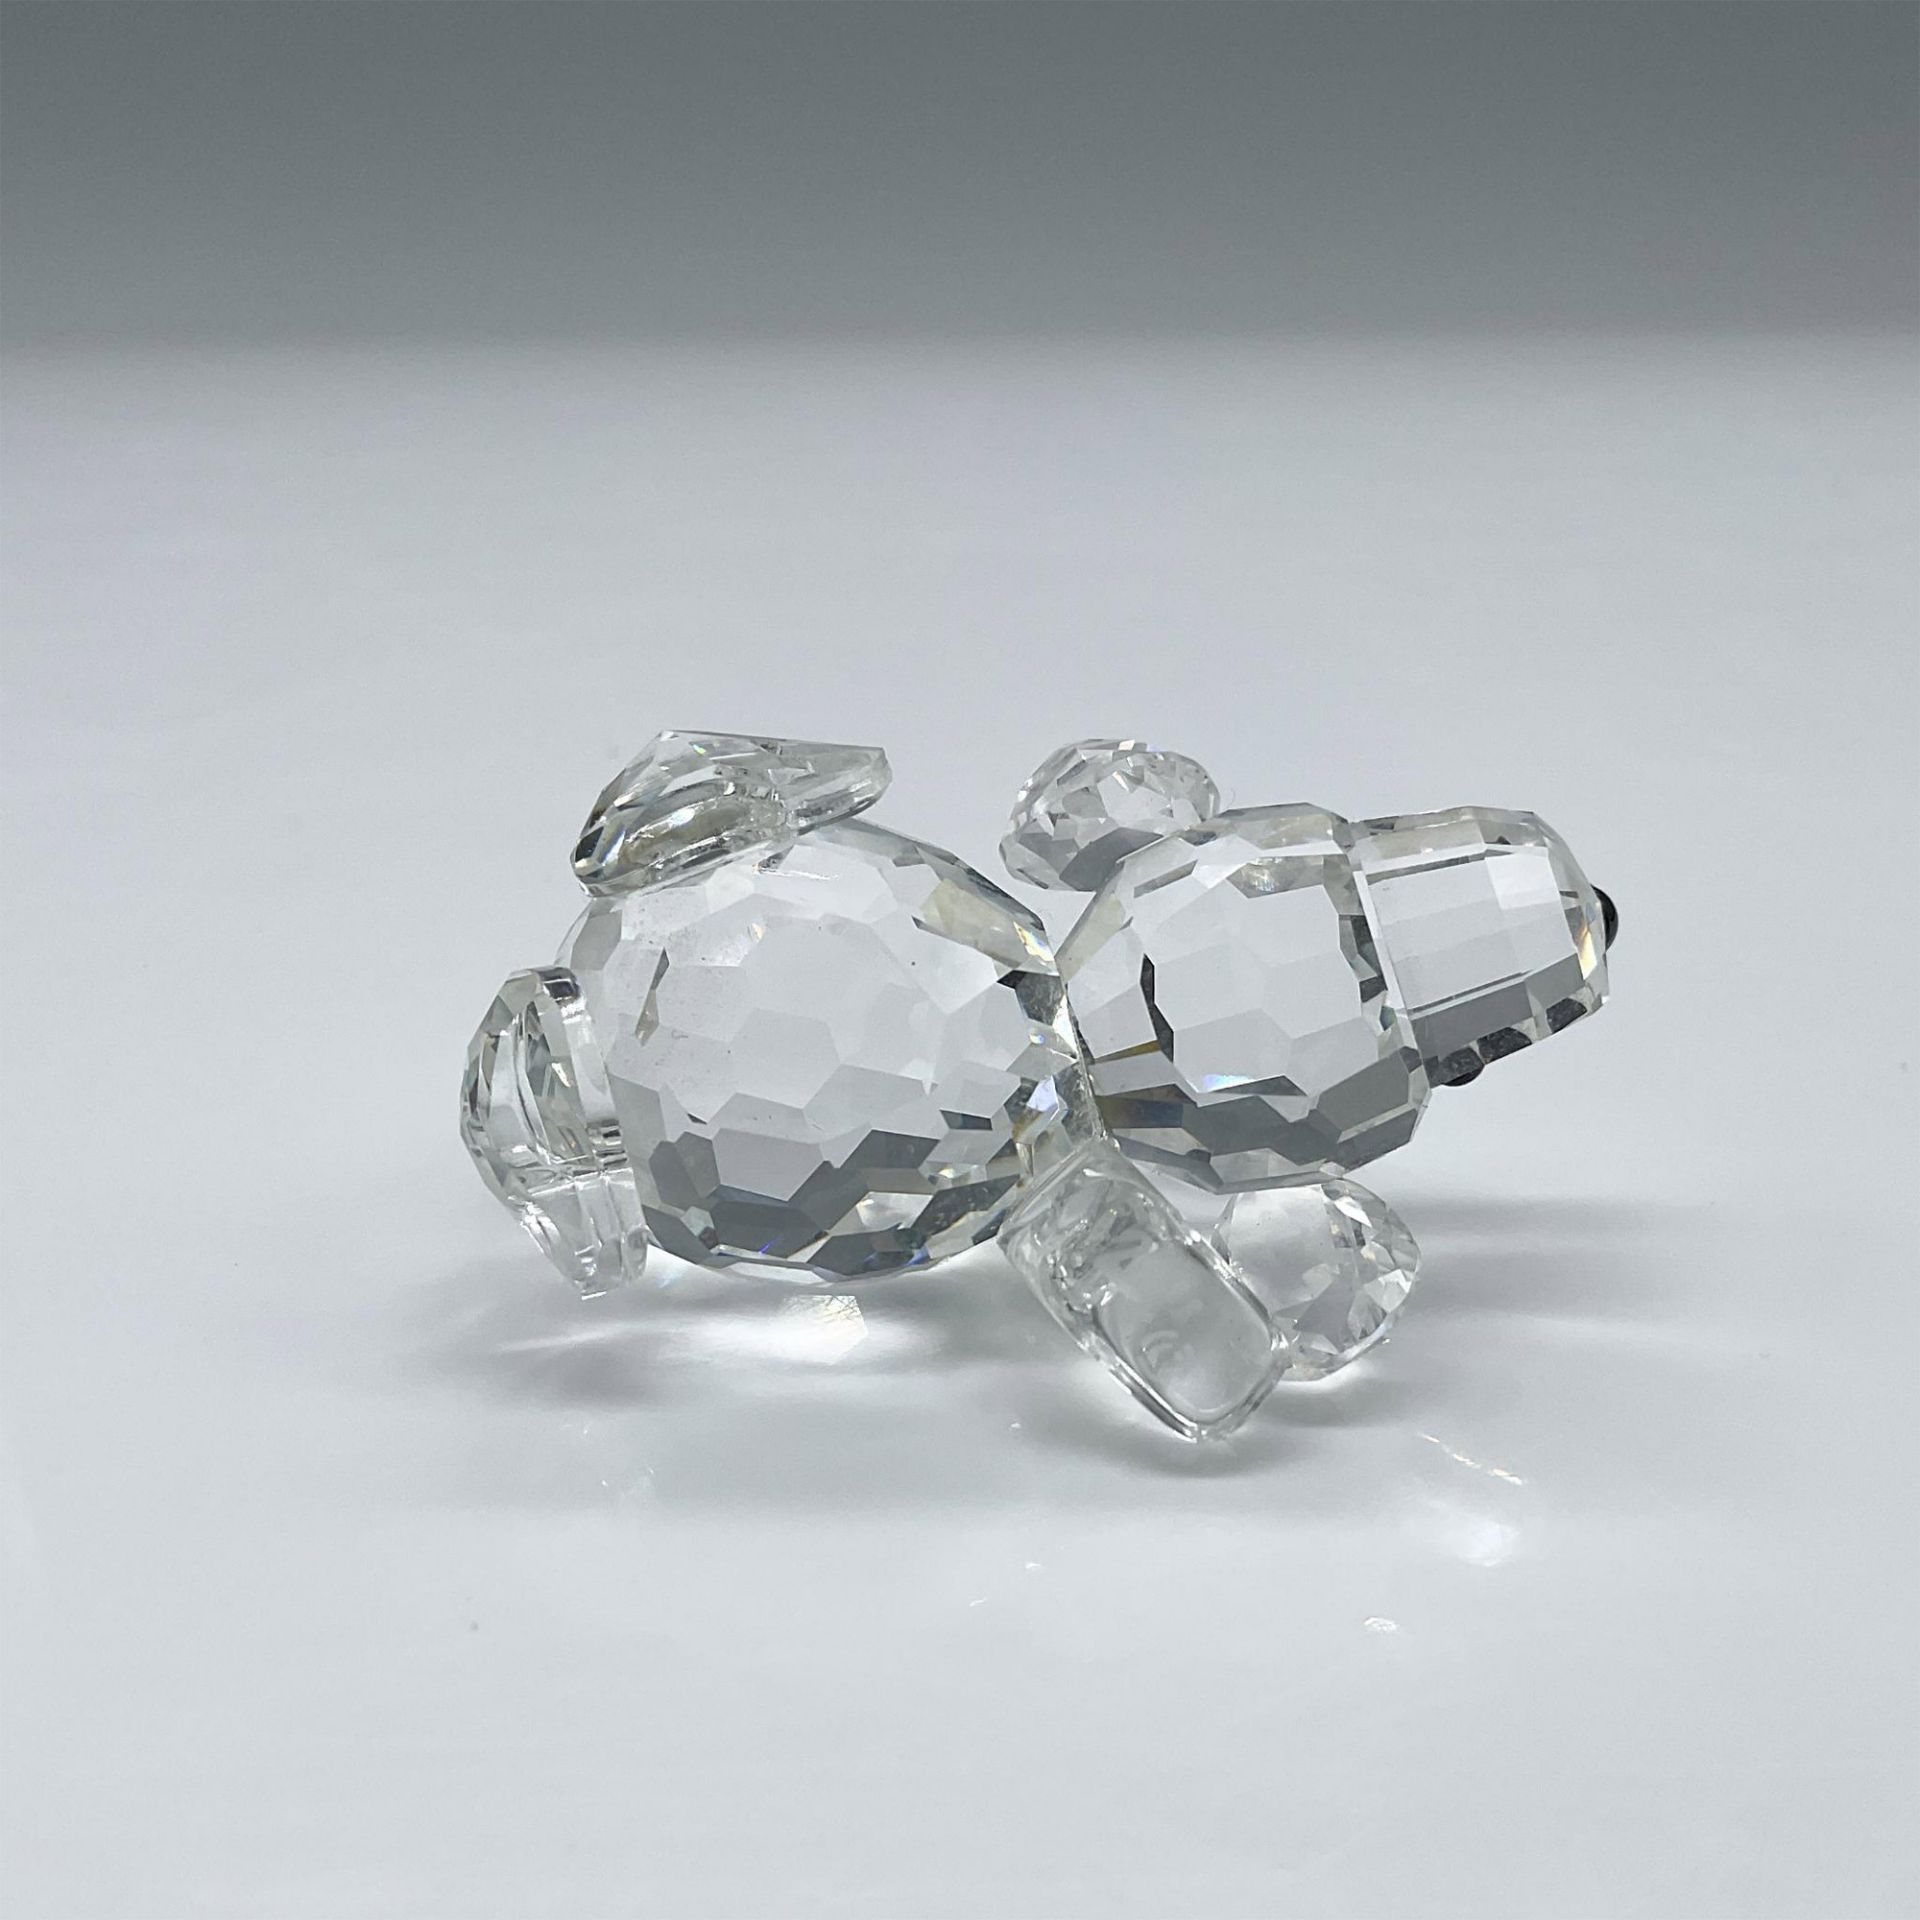 Swarovski Crystal Figurine, Beagle Playing - Image 3 of 4